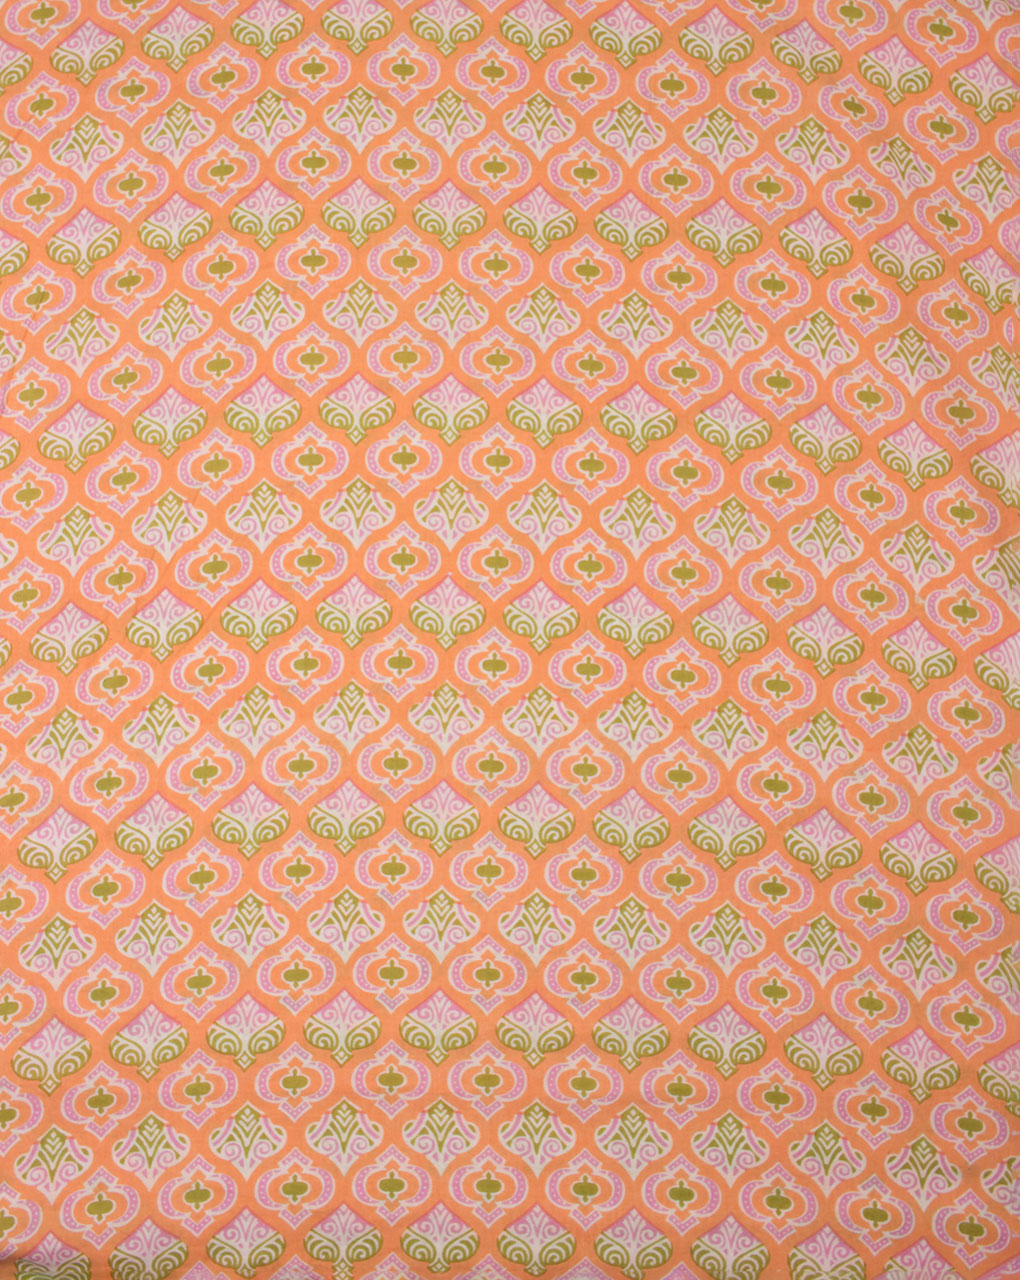 Treliis Screen Print Cotton Fabric - Fabriclore.com